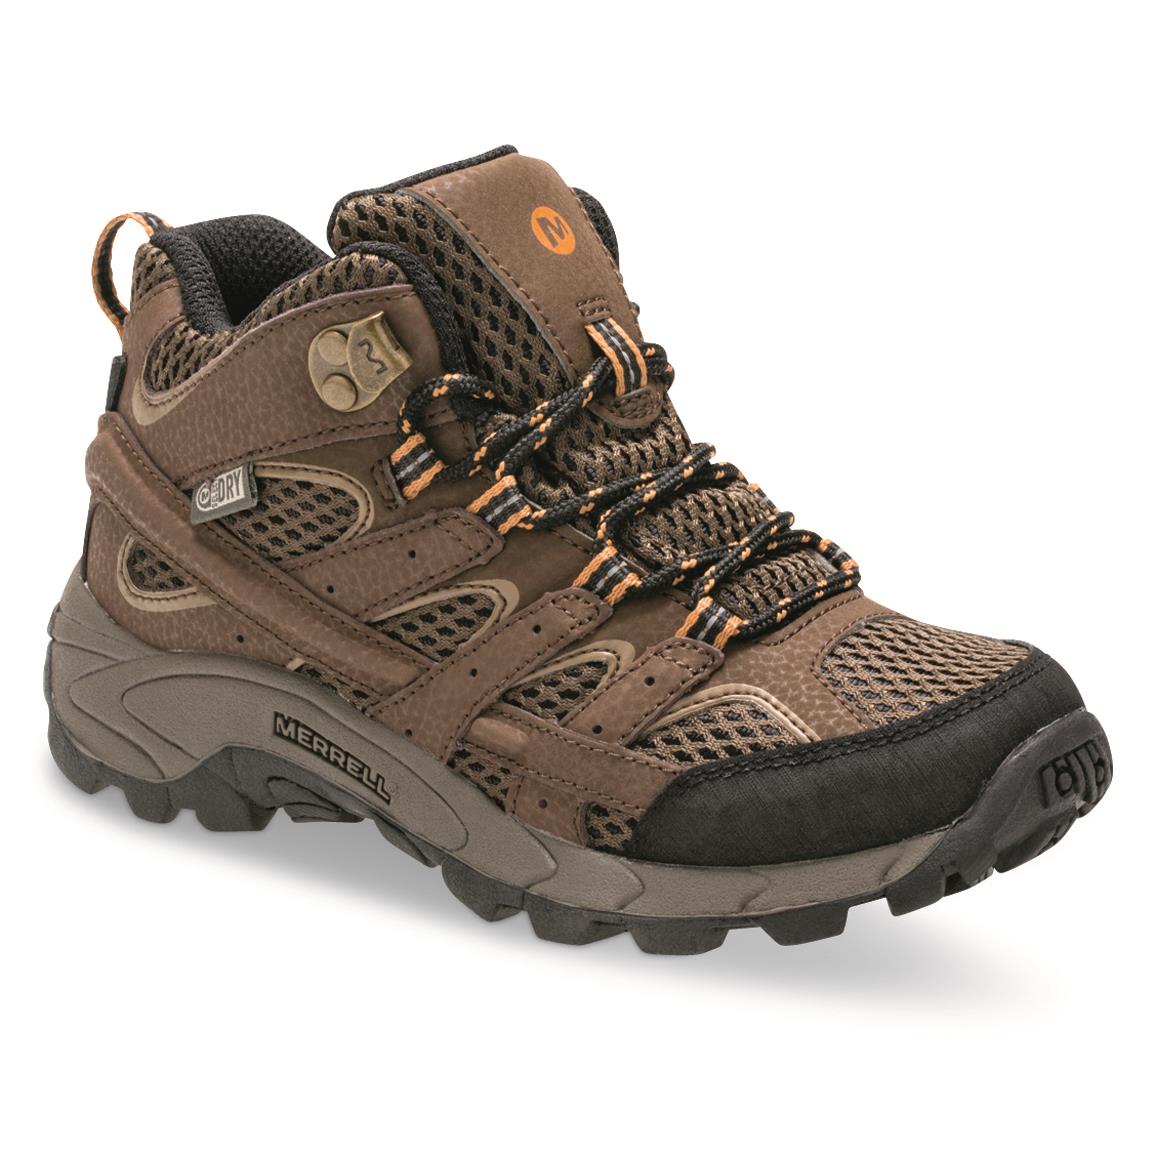 Merrell Kids' Moab 2 Waterproof Hiking Boots, Earth